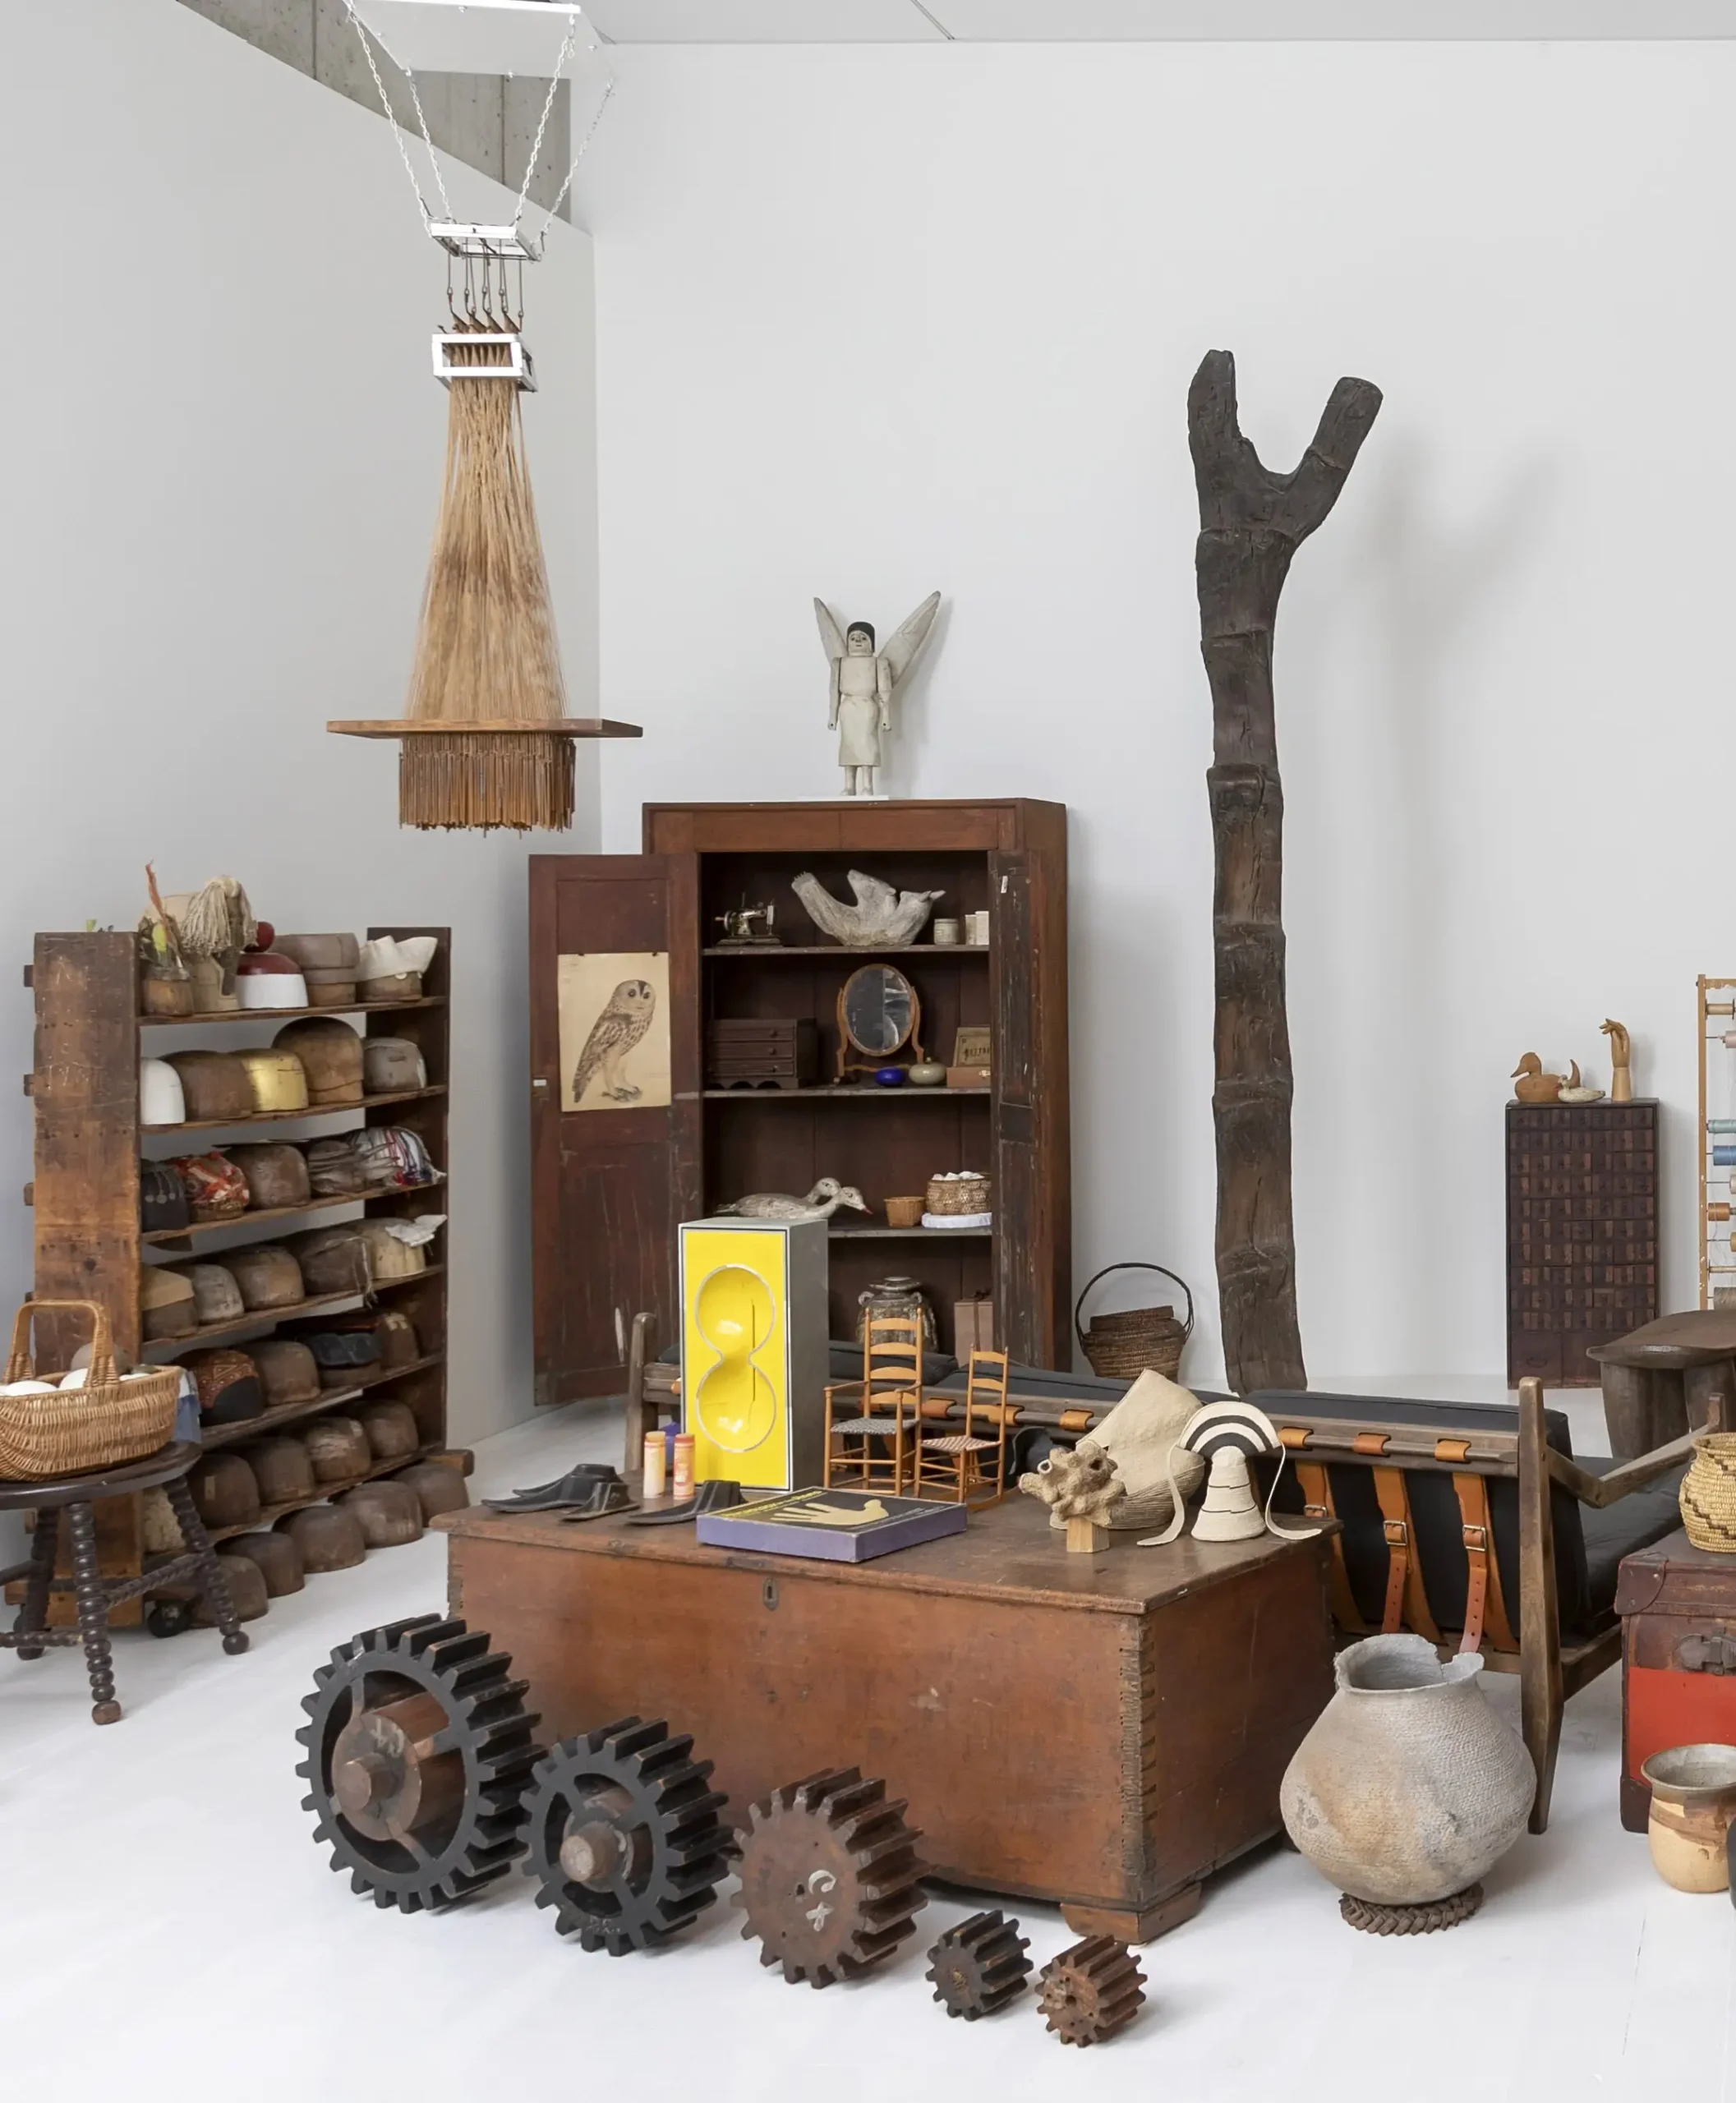 Lenore Tawney's studio items on display